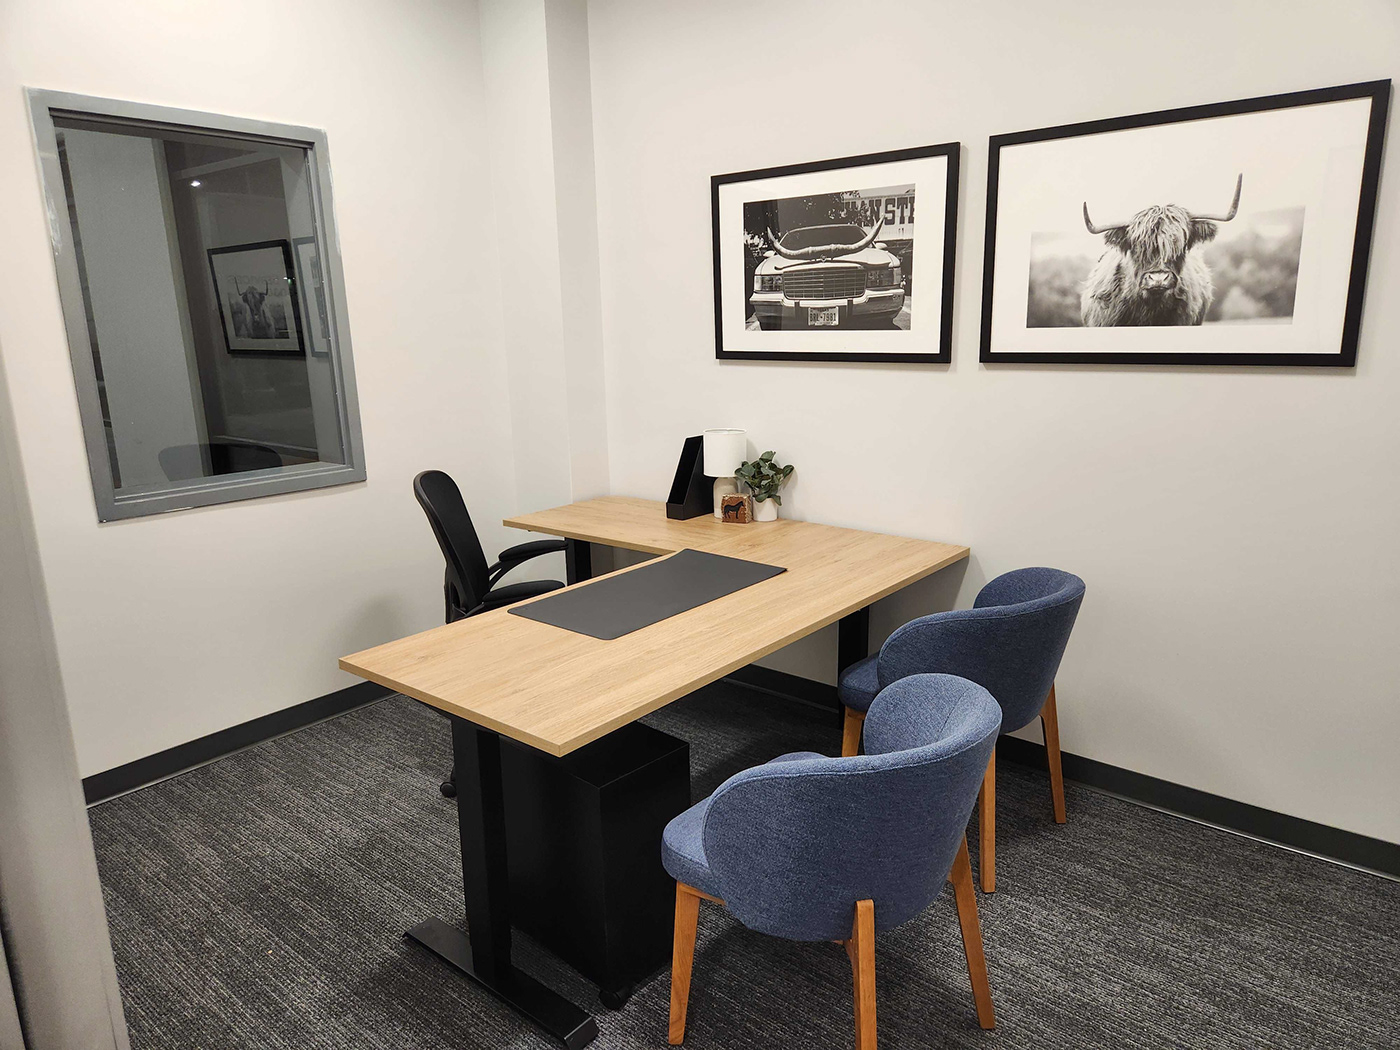 comercial FF&E ffe furniture Space Planning Office interior design 